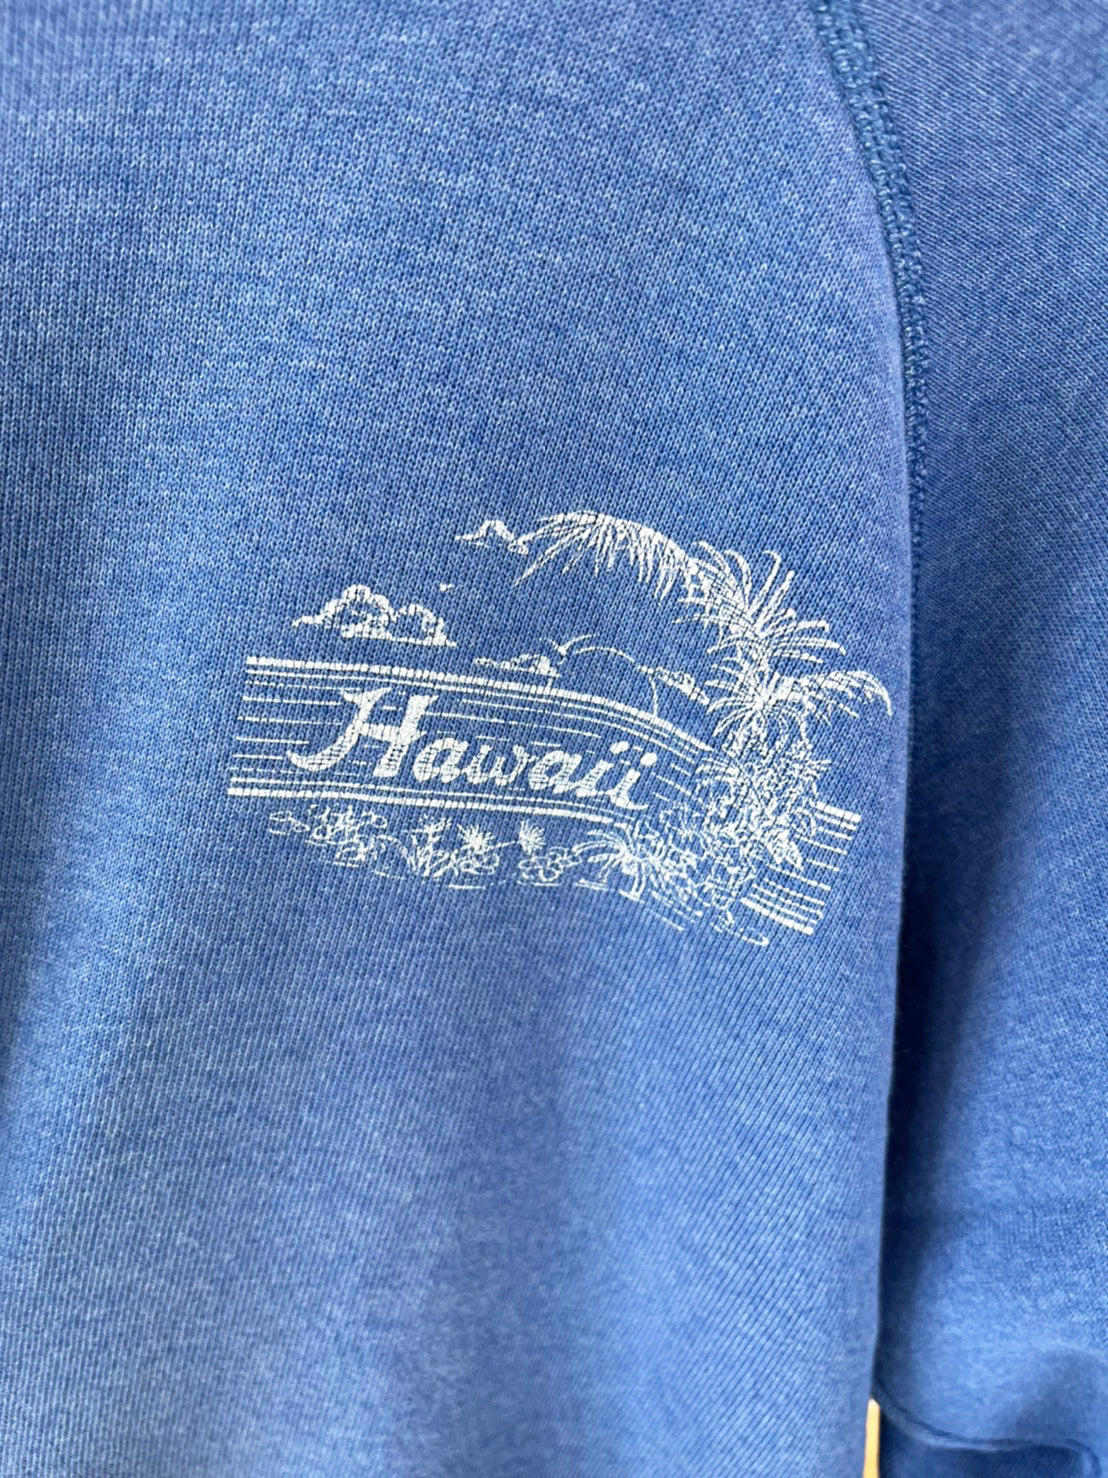 【Hanes 】80's Hawaii Souvenir sweat shirts made in USA (men's XL)